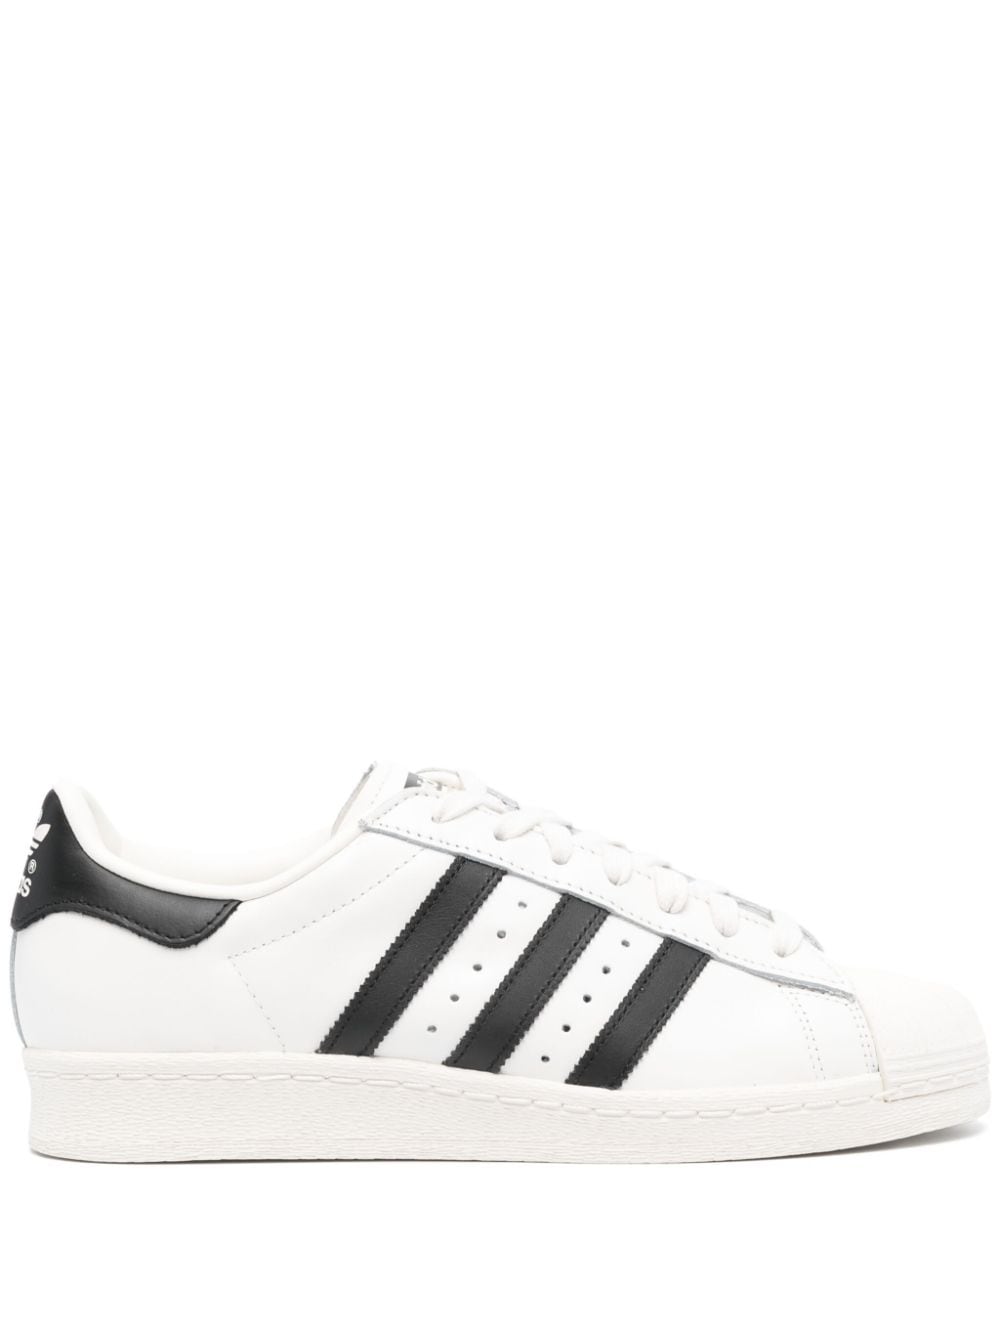 Adidas Originals Superstar 82 Sneakers In White